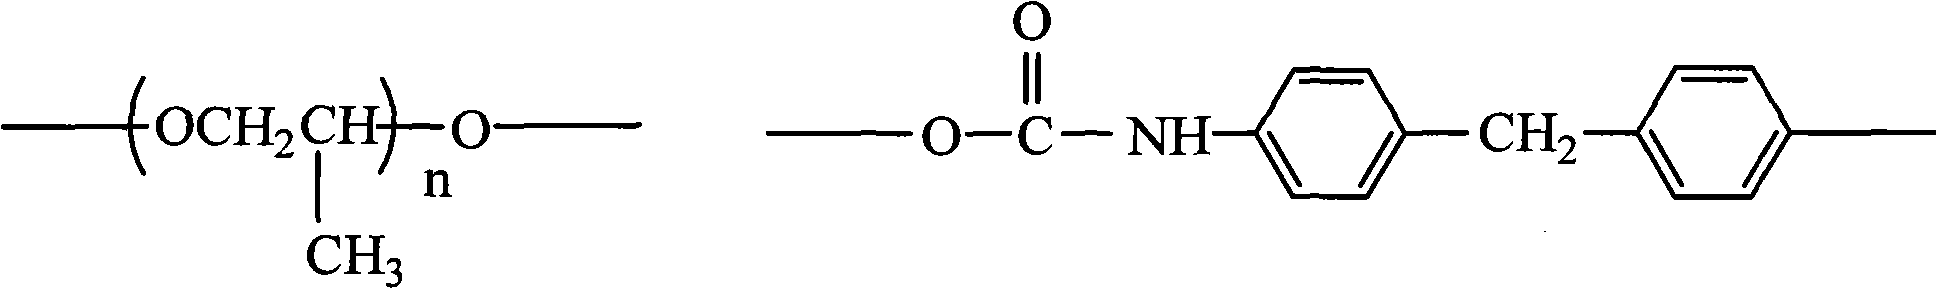 Pyridine quaternary ammonium salt polyurethane and preparation method thereof